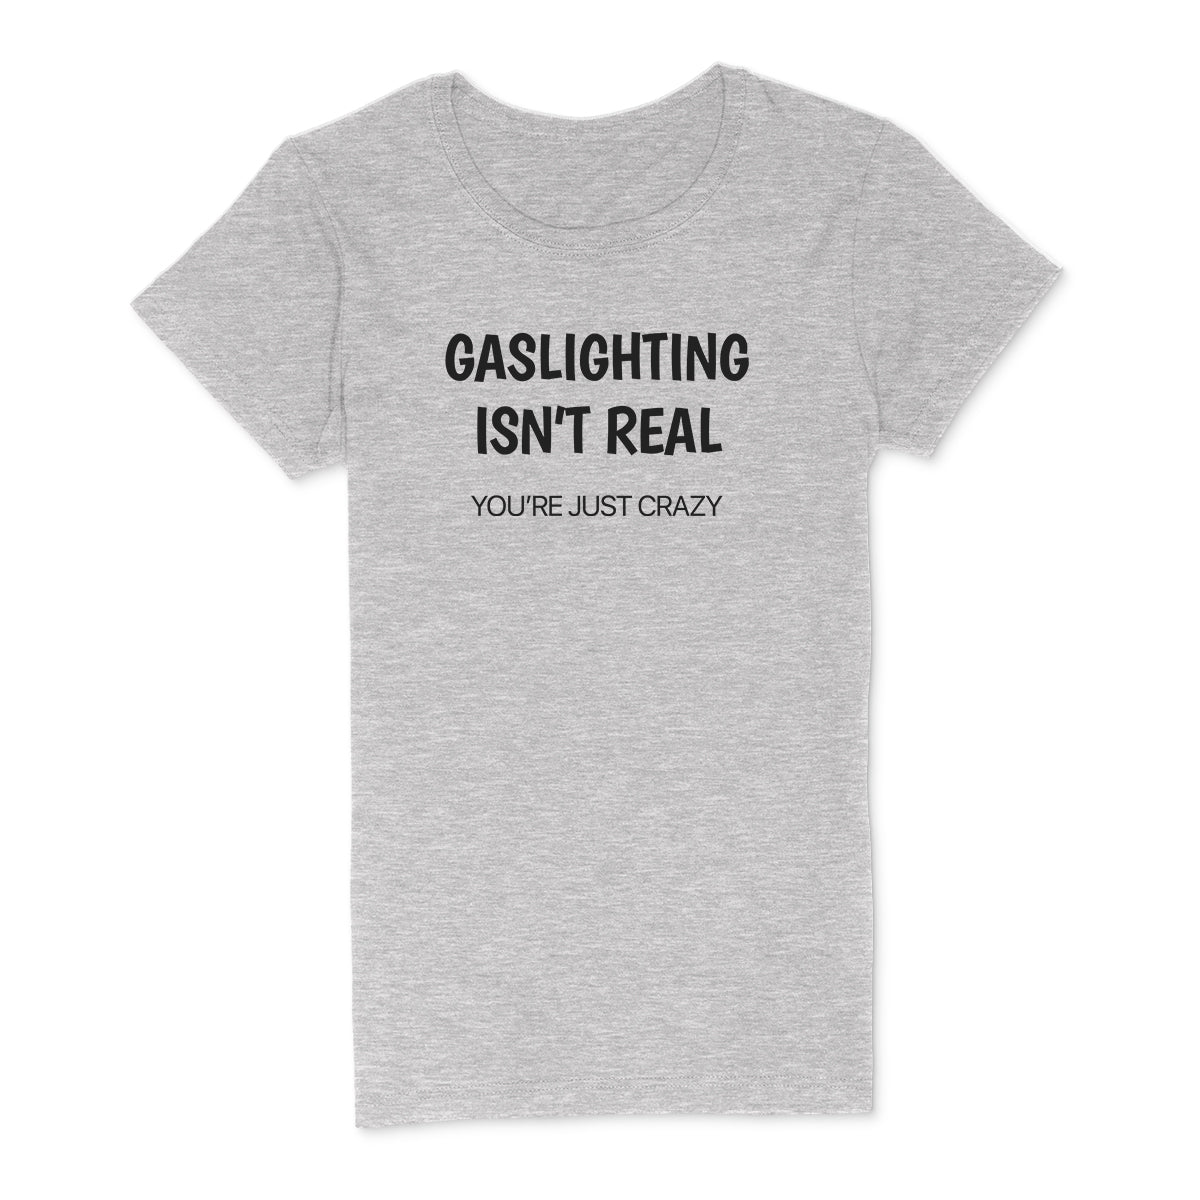 "Gaslighting Isn't Real" Premium Midweight Ringspun Cotton T-Shirt - Mens/Womens Fits